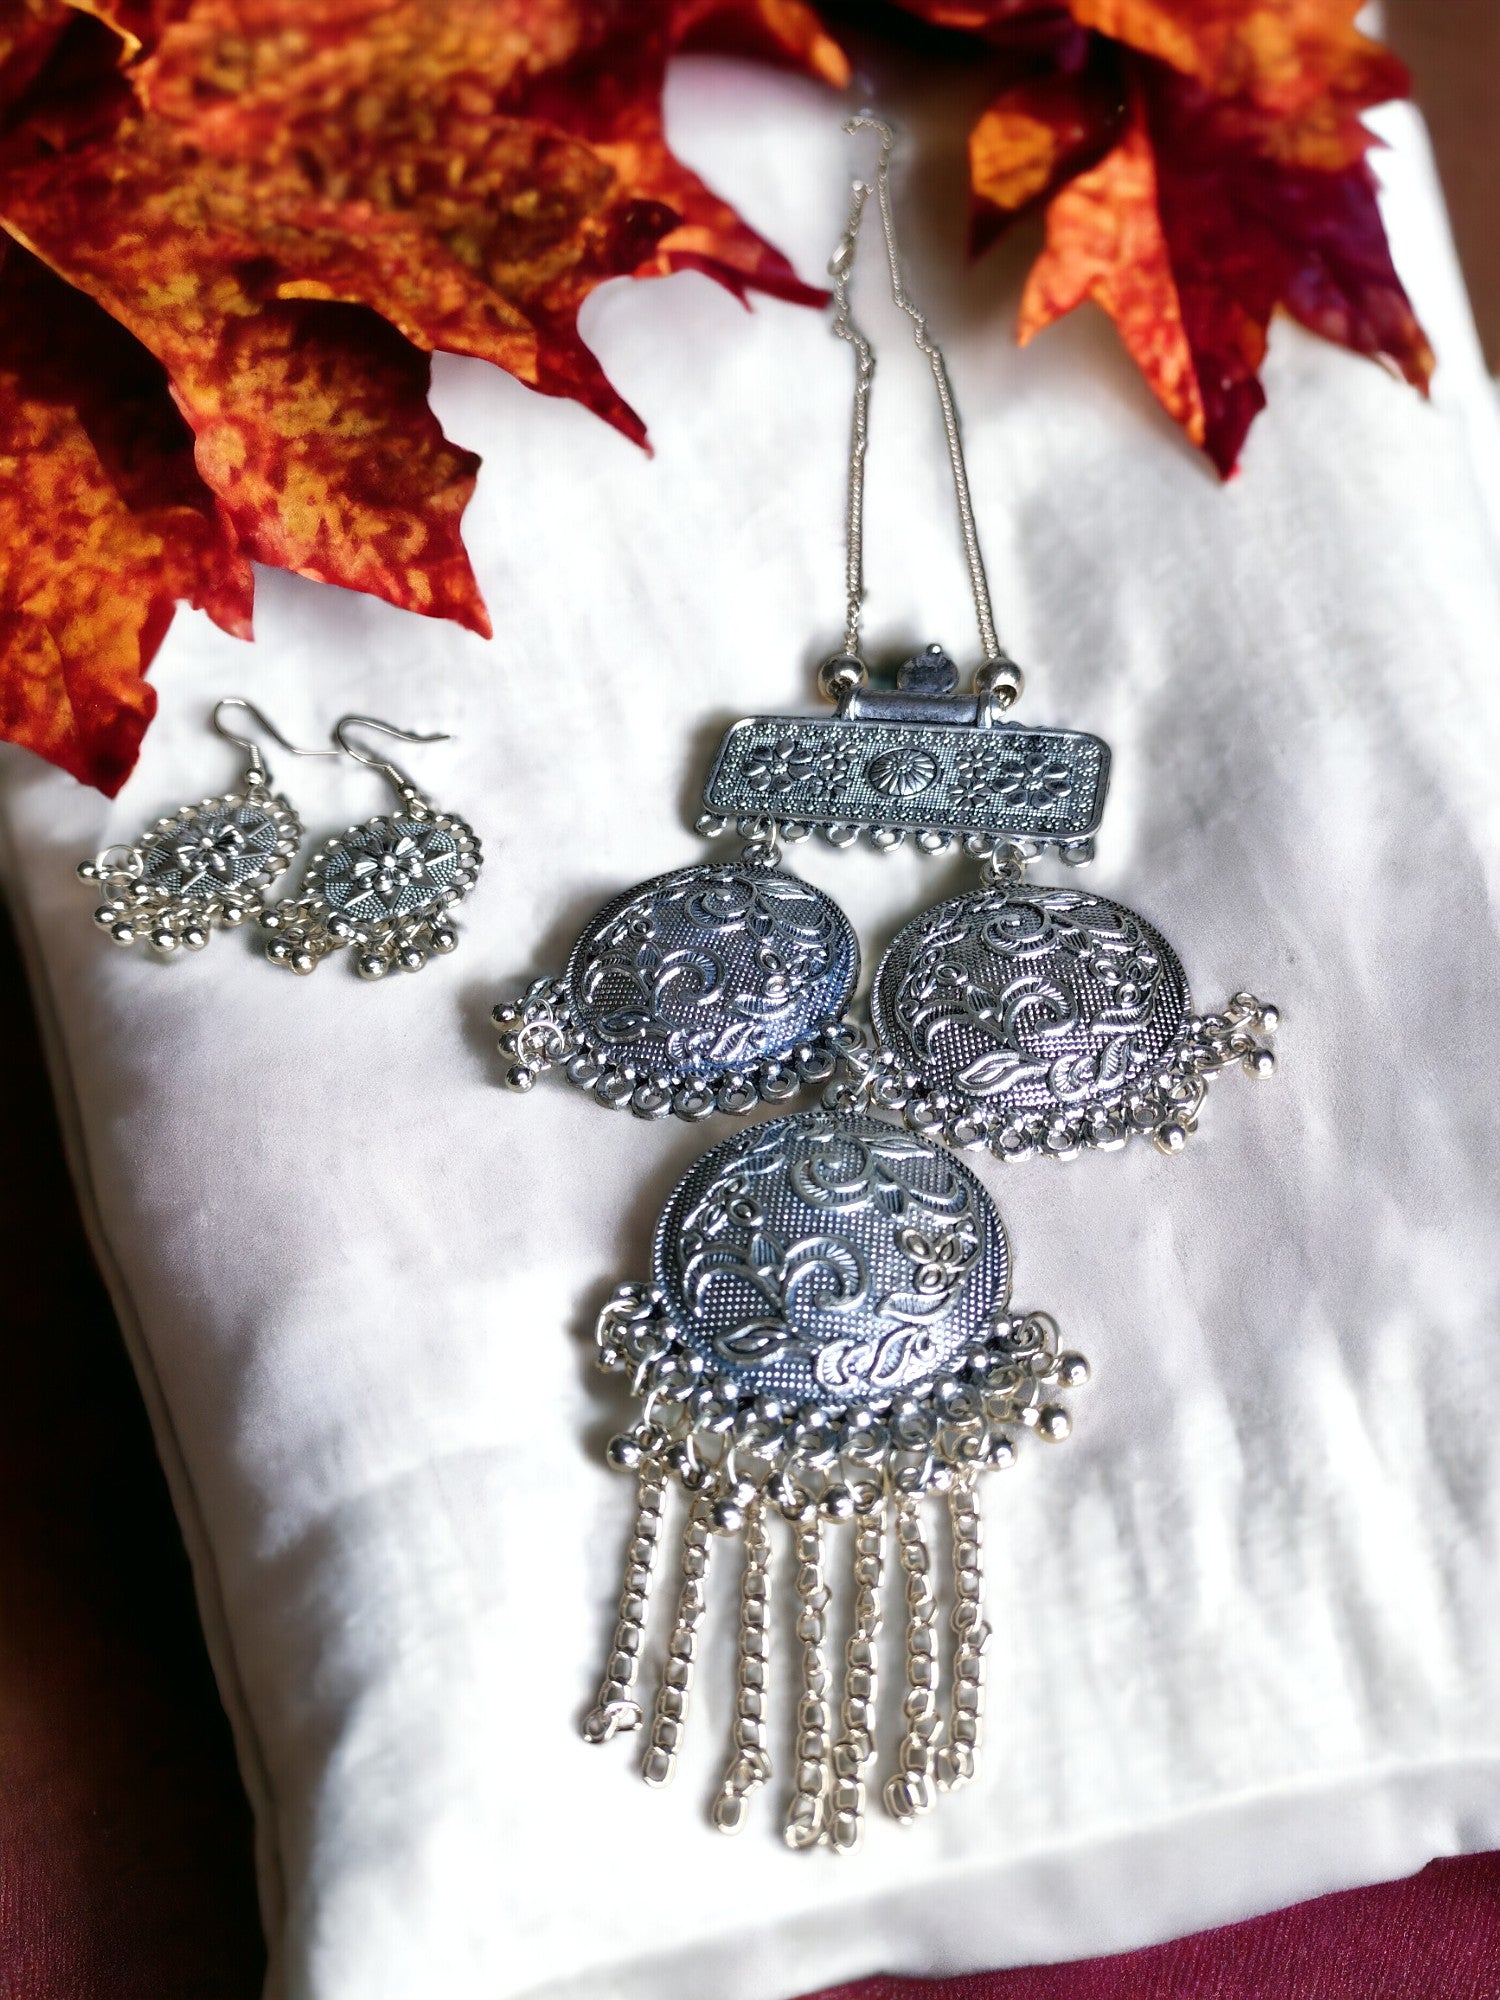 Mystic Moonlight Set - Handmade Oxidized Necklace& Earrings